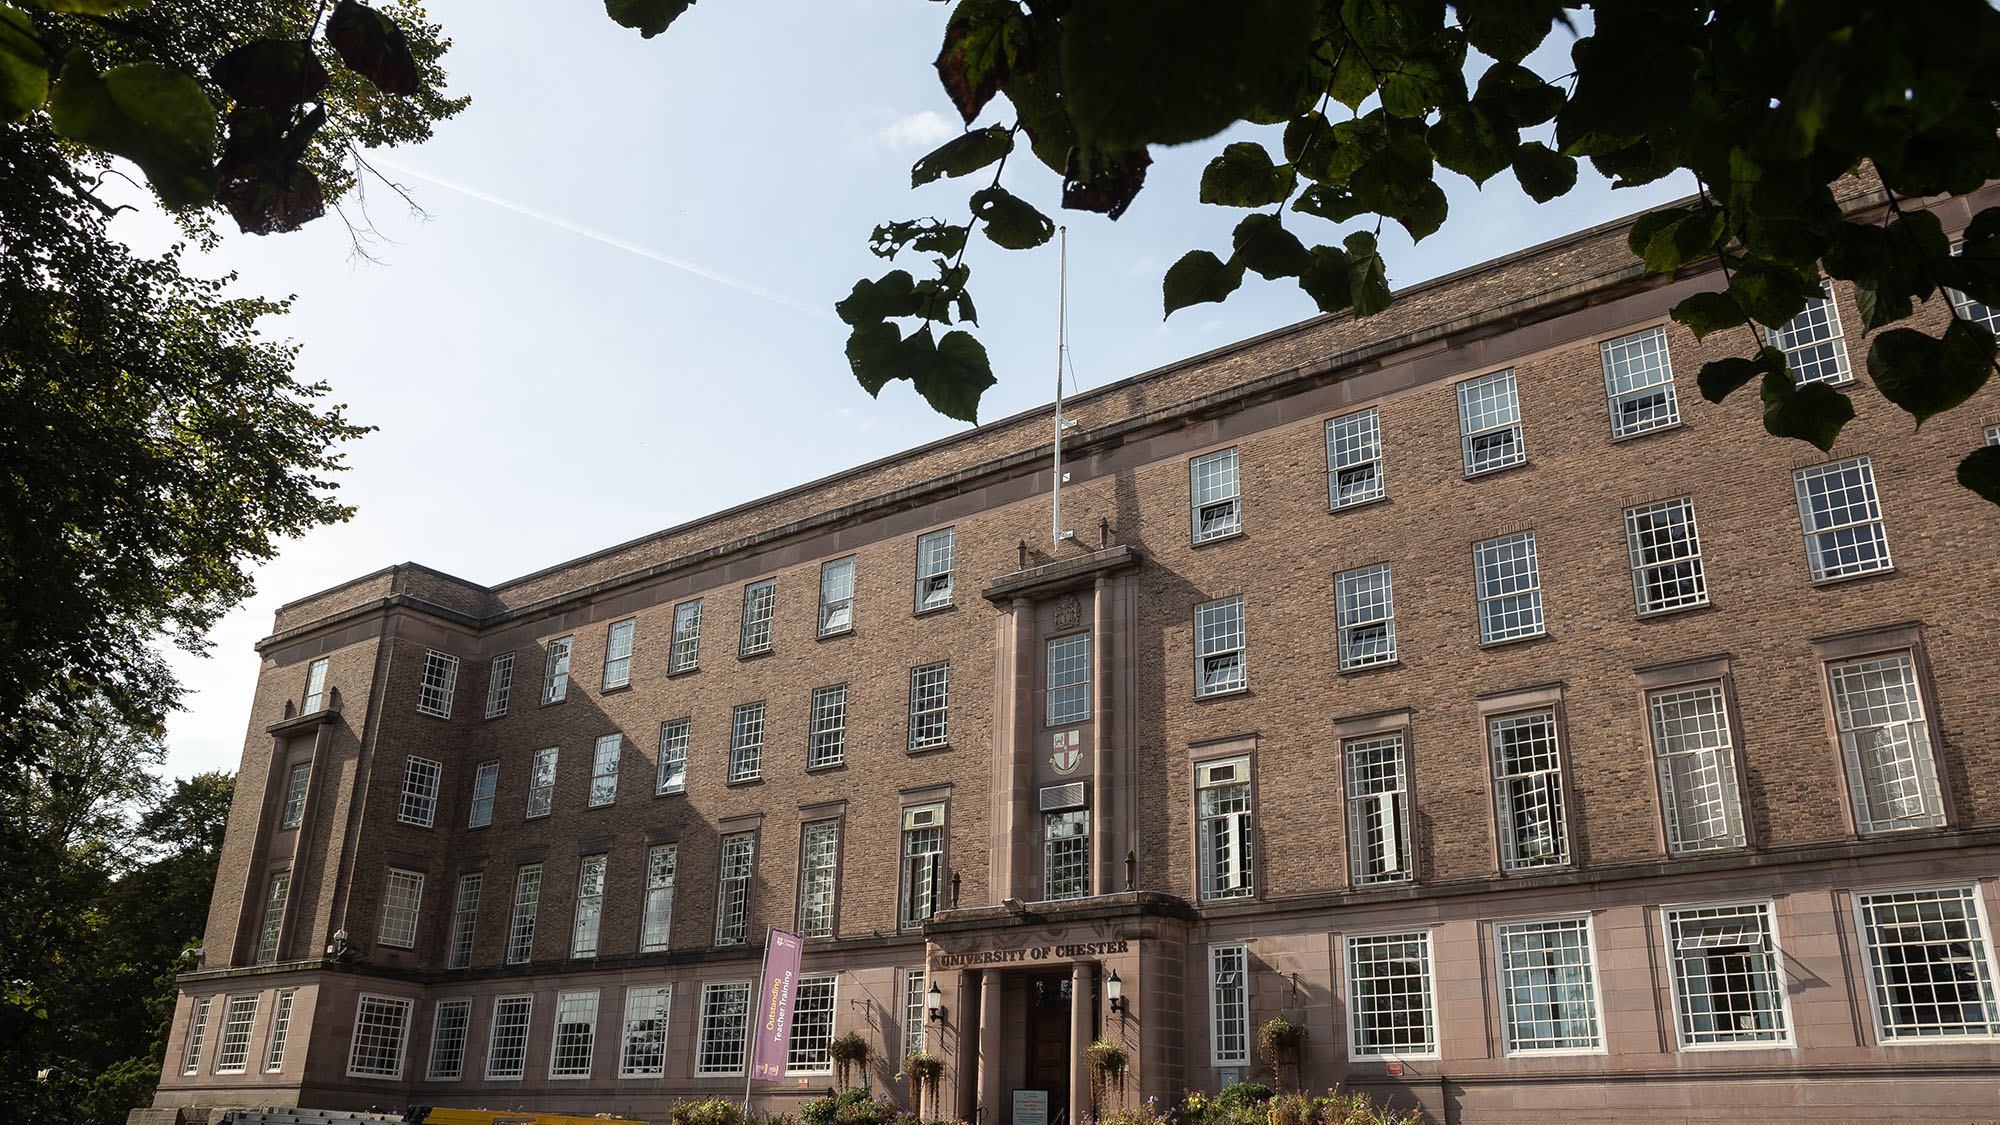 University of Chester Riverside Museum Opens